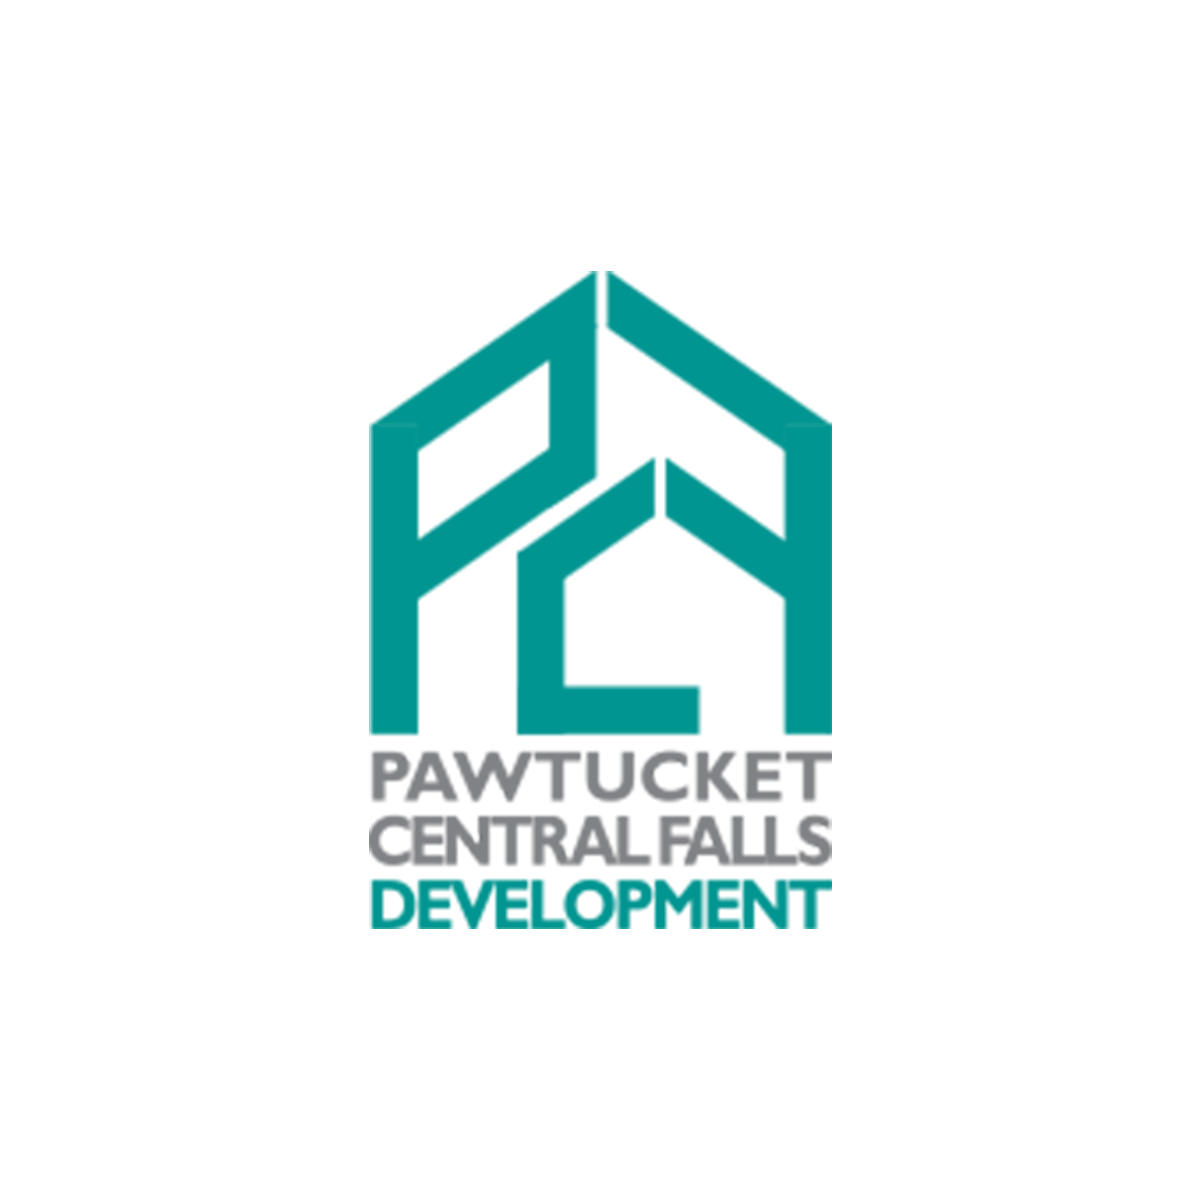 Pawtucket Central Falls Development  (PCF Development)